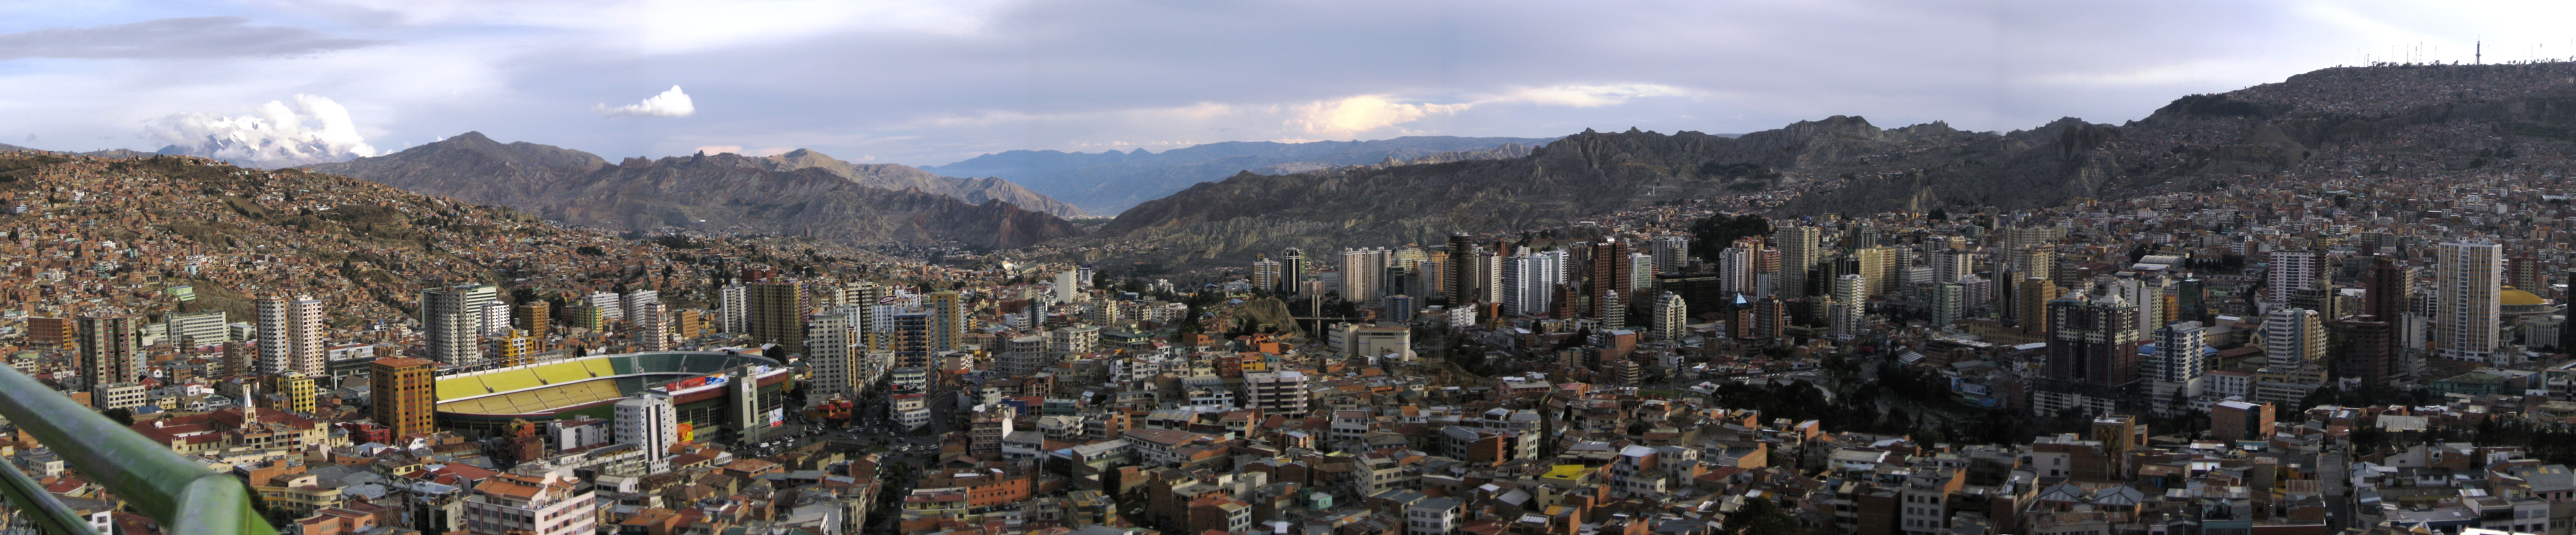 Panoramic view of La Paz